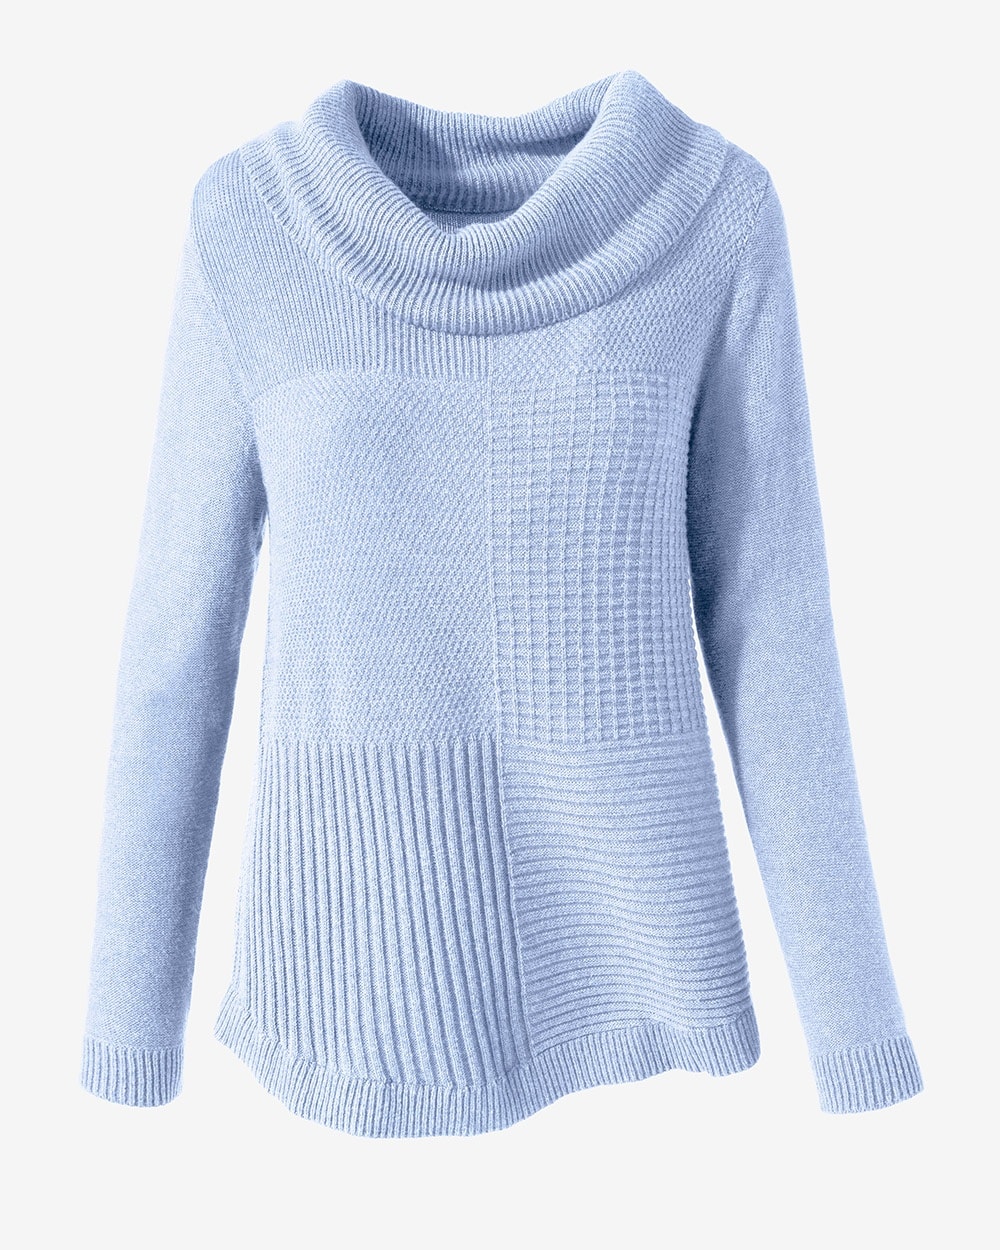 Cowl-Neck Mixed Stitch Sweater